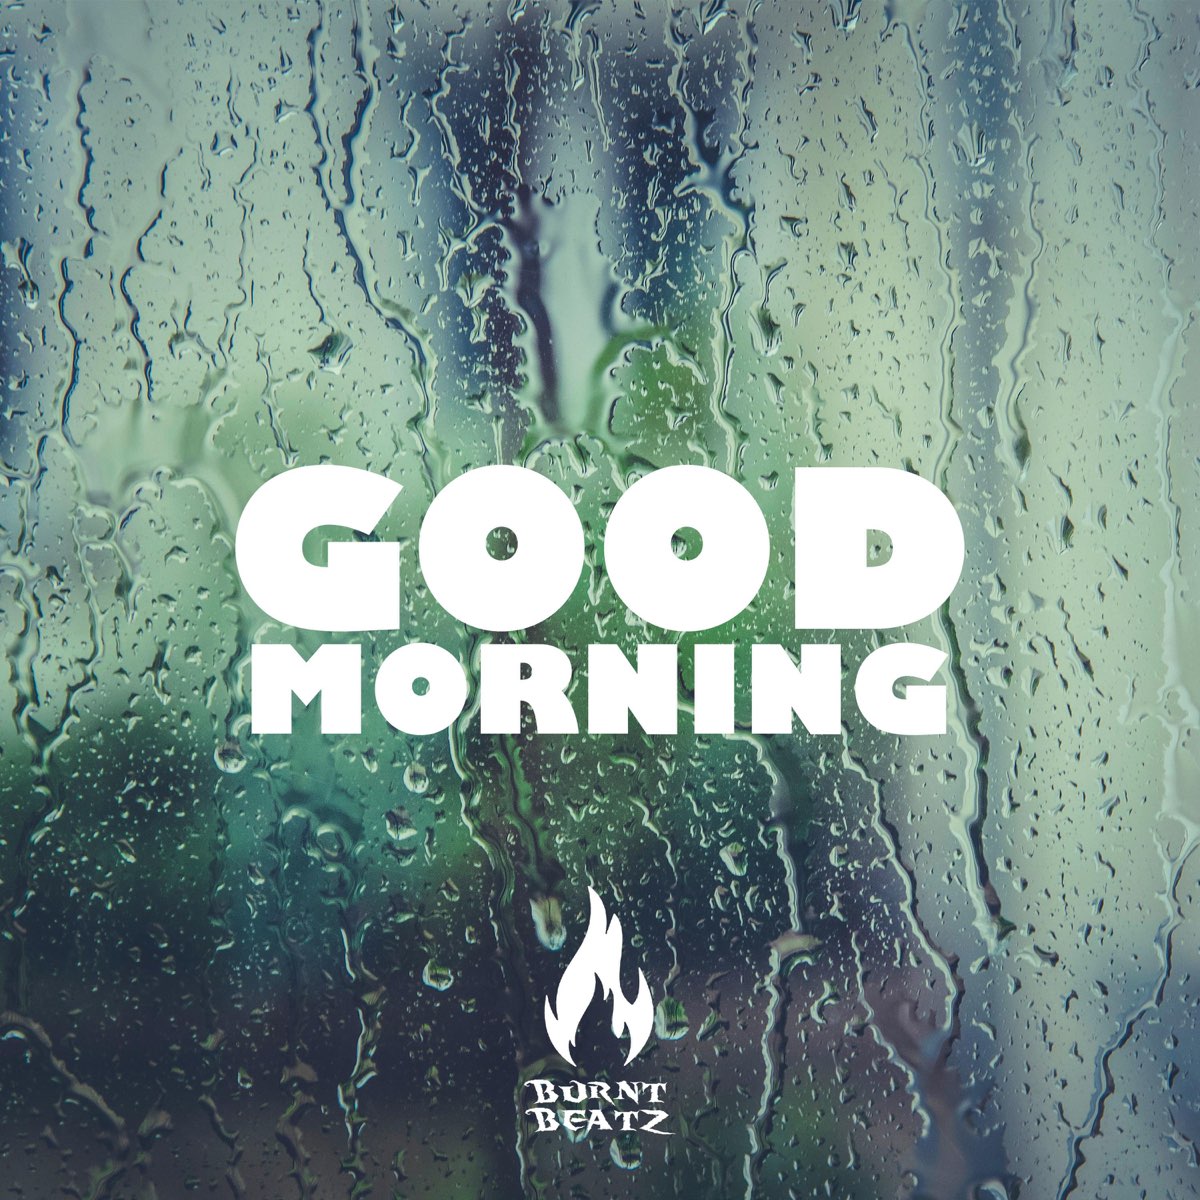 Good Morning - EP by Burnt Beatz on Apple Music